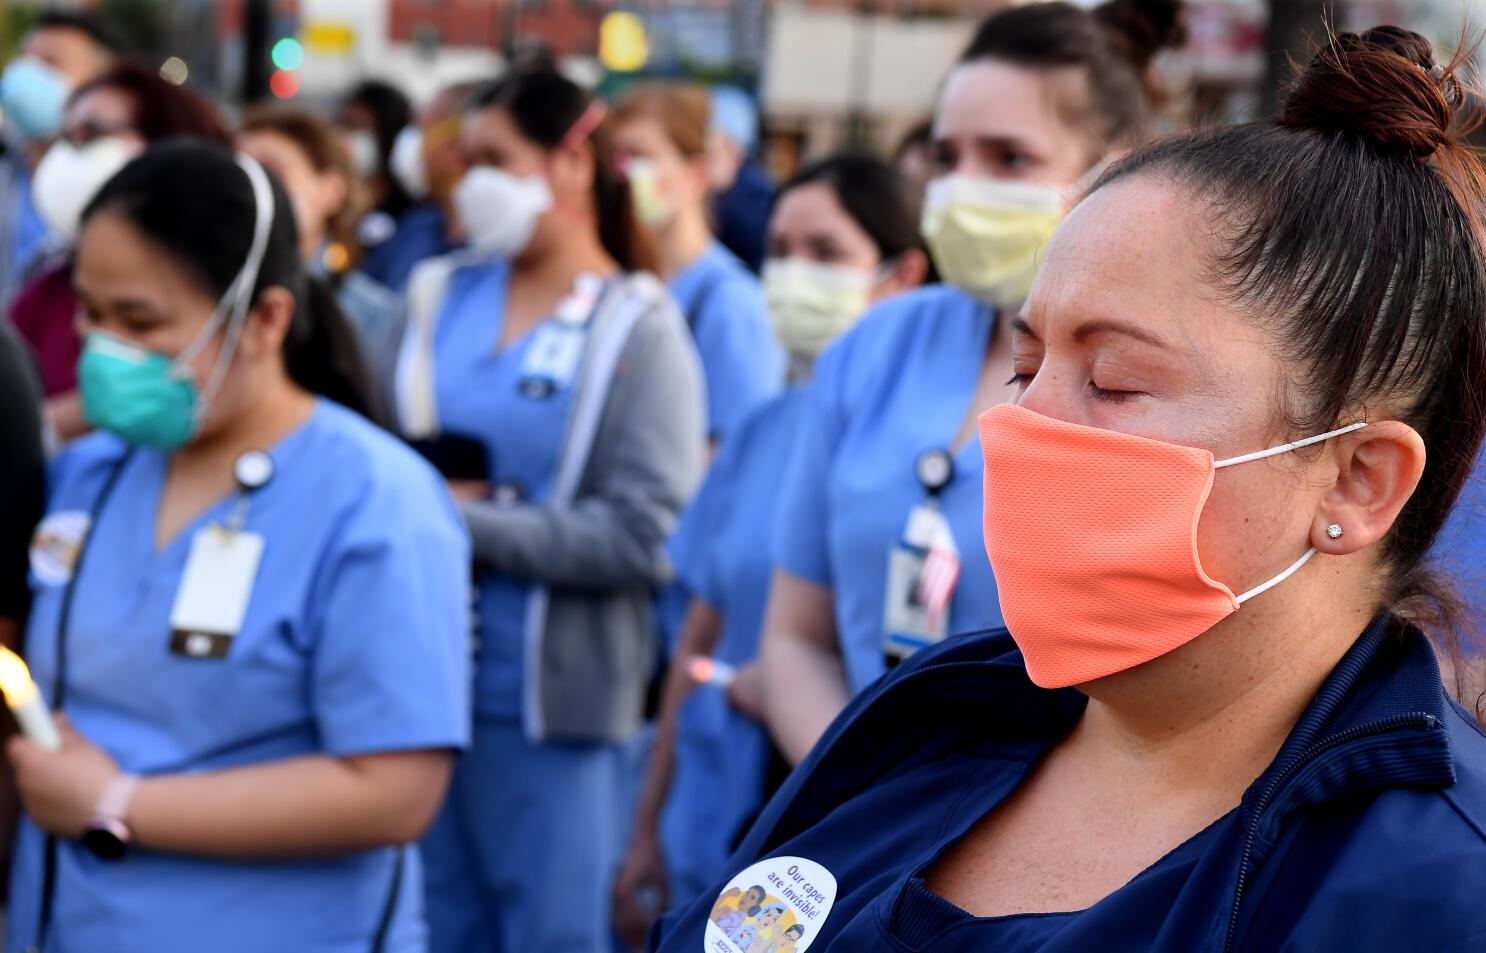 L.A. nurse dies after treating a coronavirus patient - Los Angeles Times